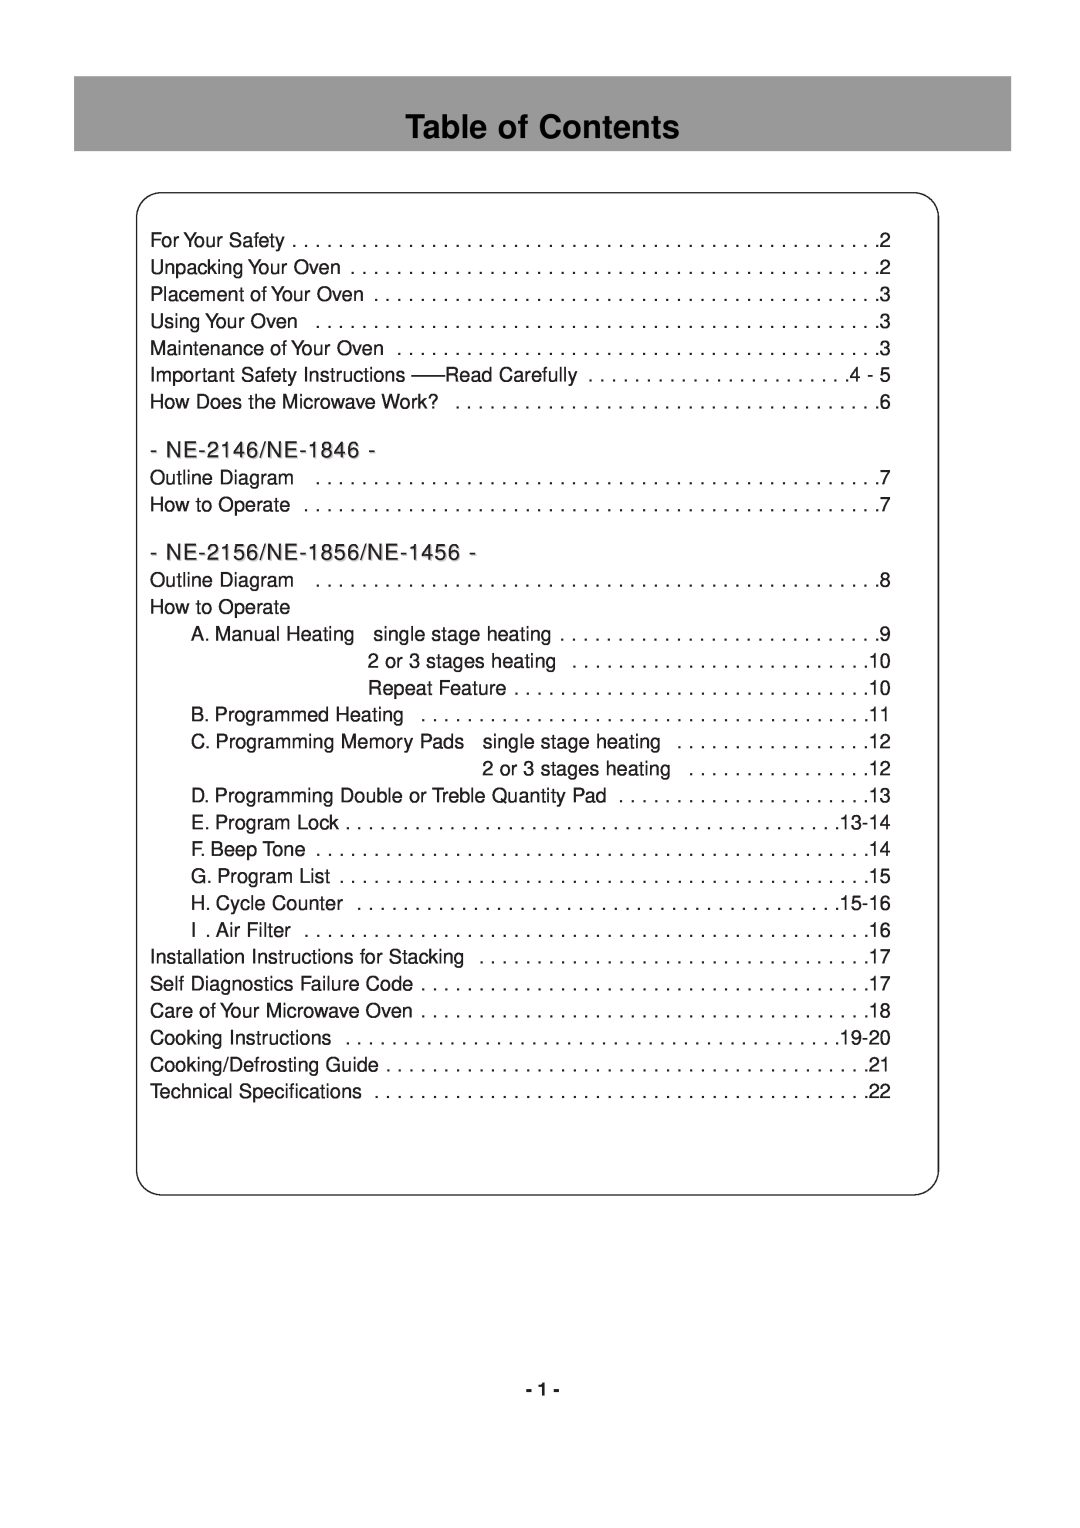 Panasonic operating instructions Table of Contents, NE-2146/NE-1846, NE-2156/NE-1856/NE-1456 